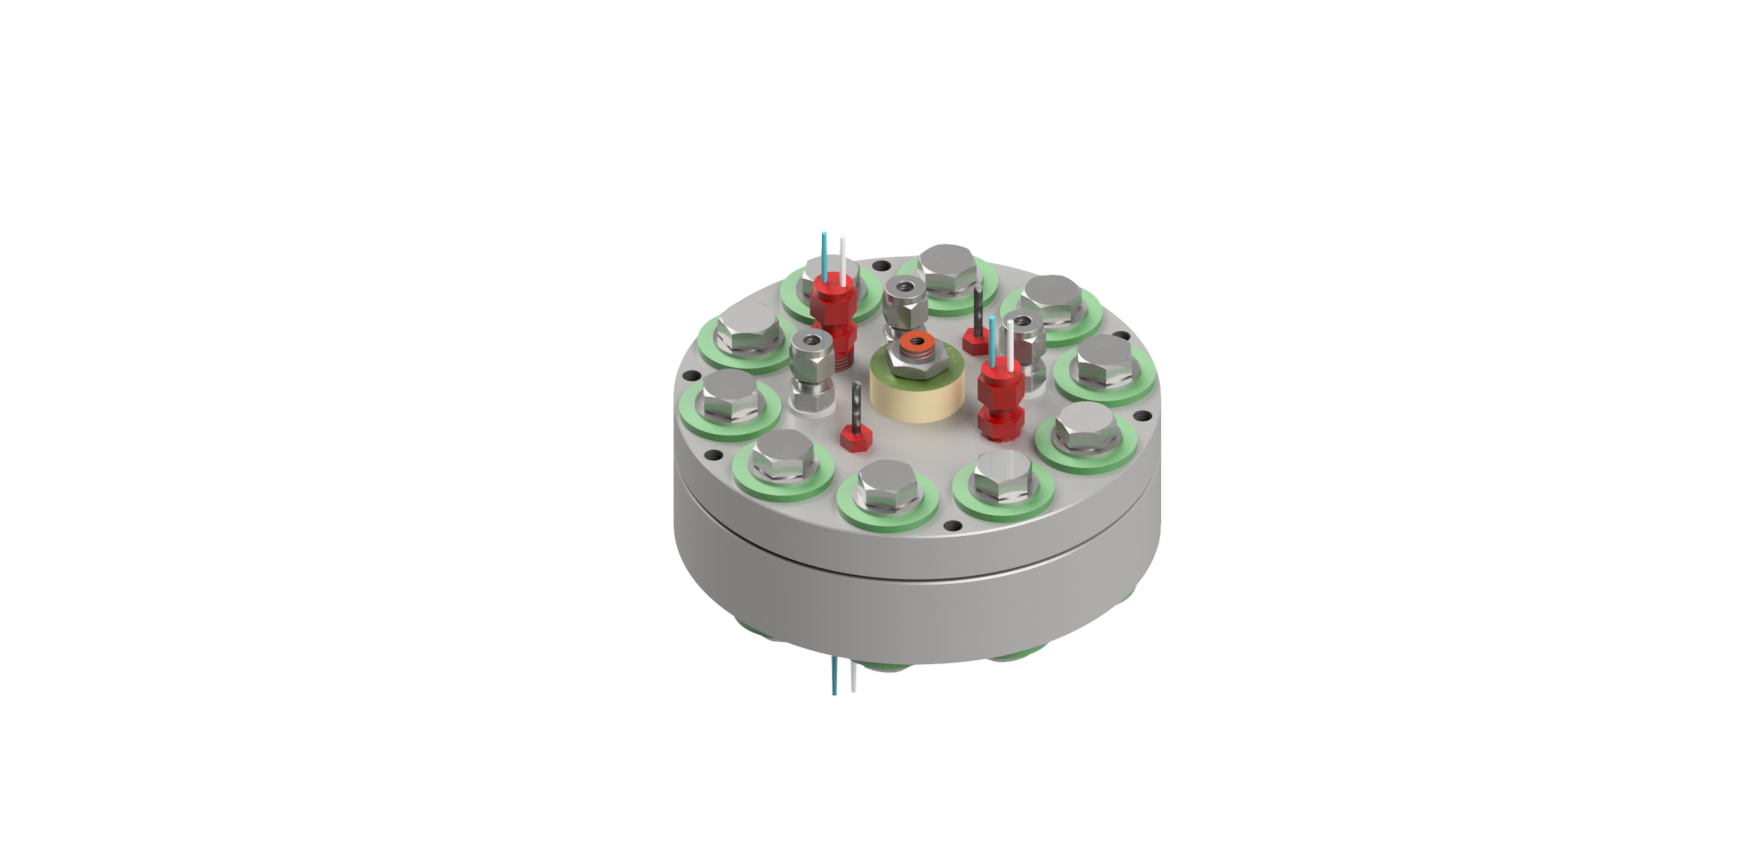 Prototype electrochemical compressor.